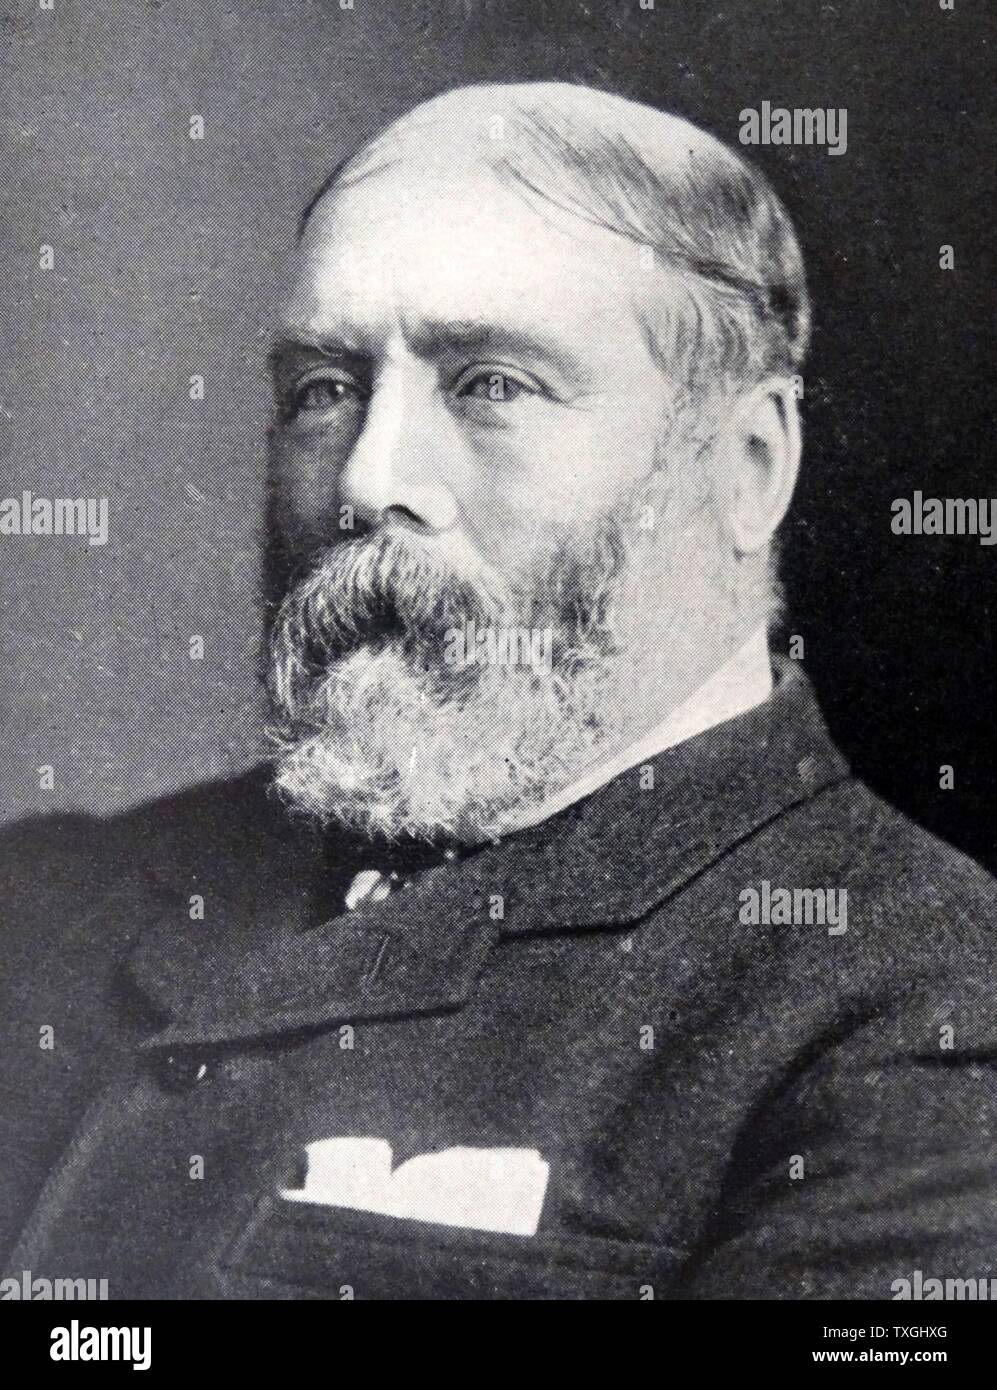 Photographic portrait of William Wills, 1st Baron Winterstoke (1830-1911) a British businessman, philanthropist and Liberal politician. Dated 20th Century Stock Photo